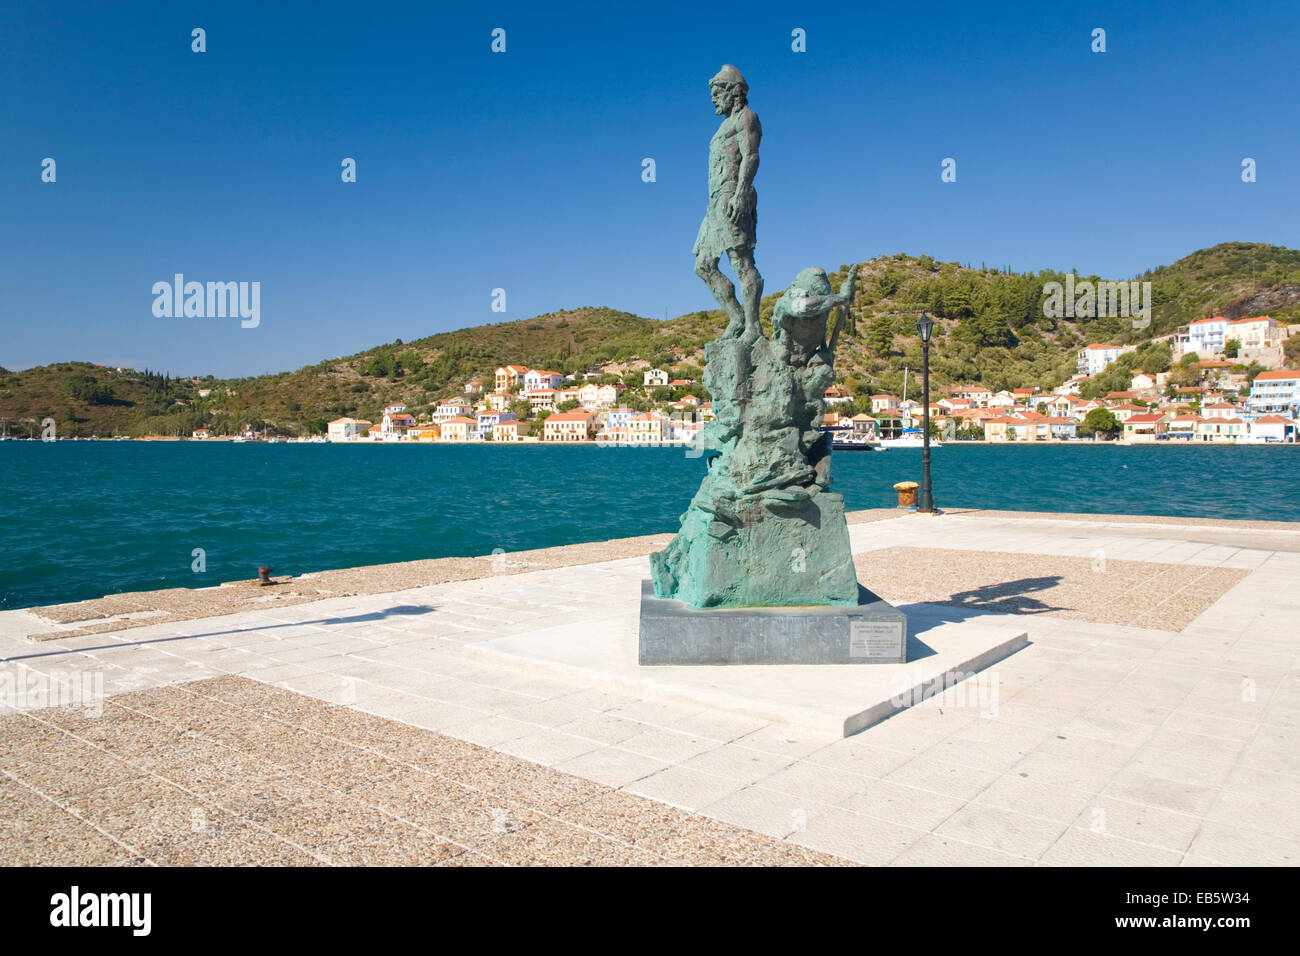 Vathi, Itaca, Isole Ionie, Grecia. Statua di Ulisse, il leggendario re di Itaca, affacciato sul porto. Foto Stock